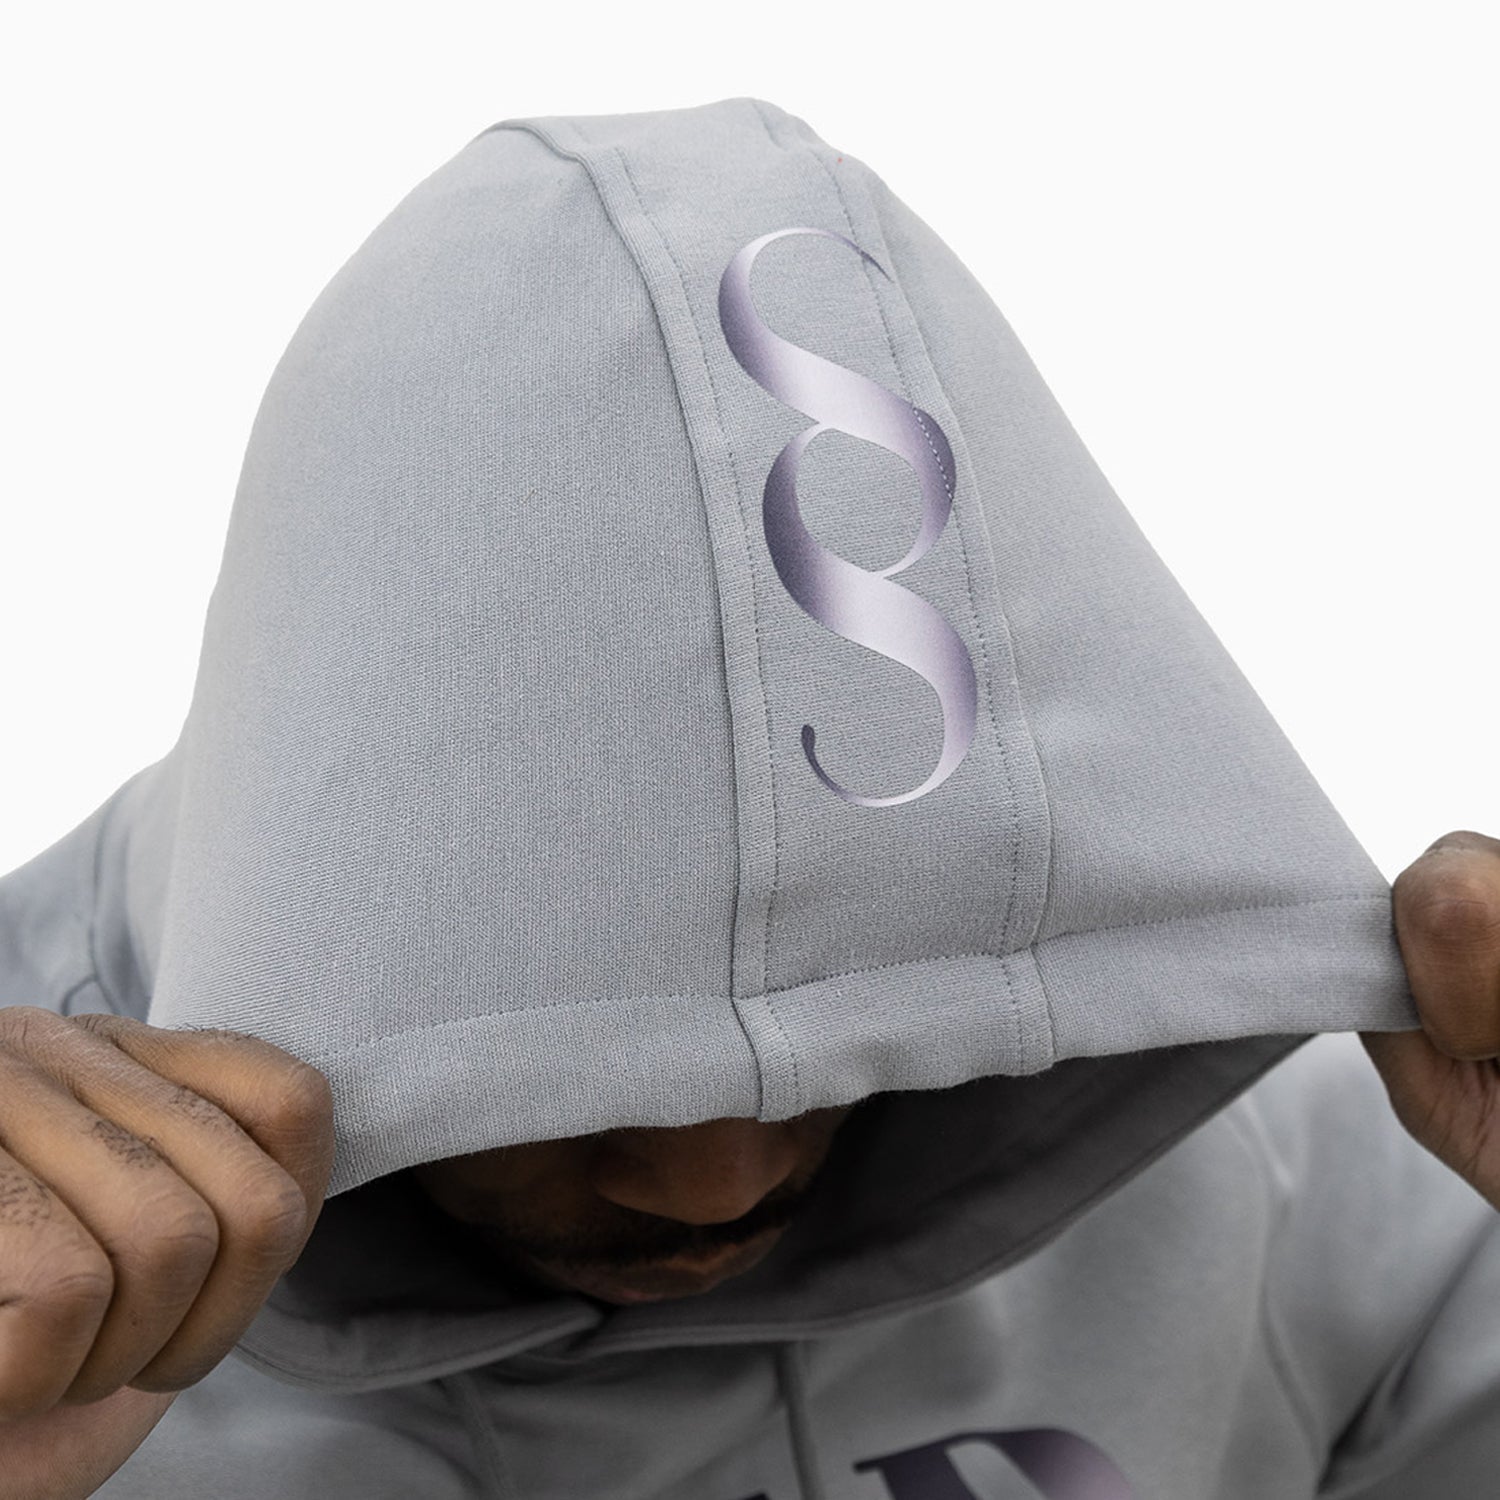 savar-mens-printed-big-logo-pull-over-hoodie-sh3038-063